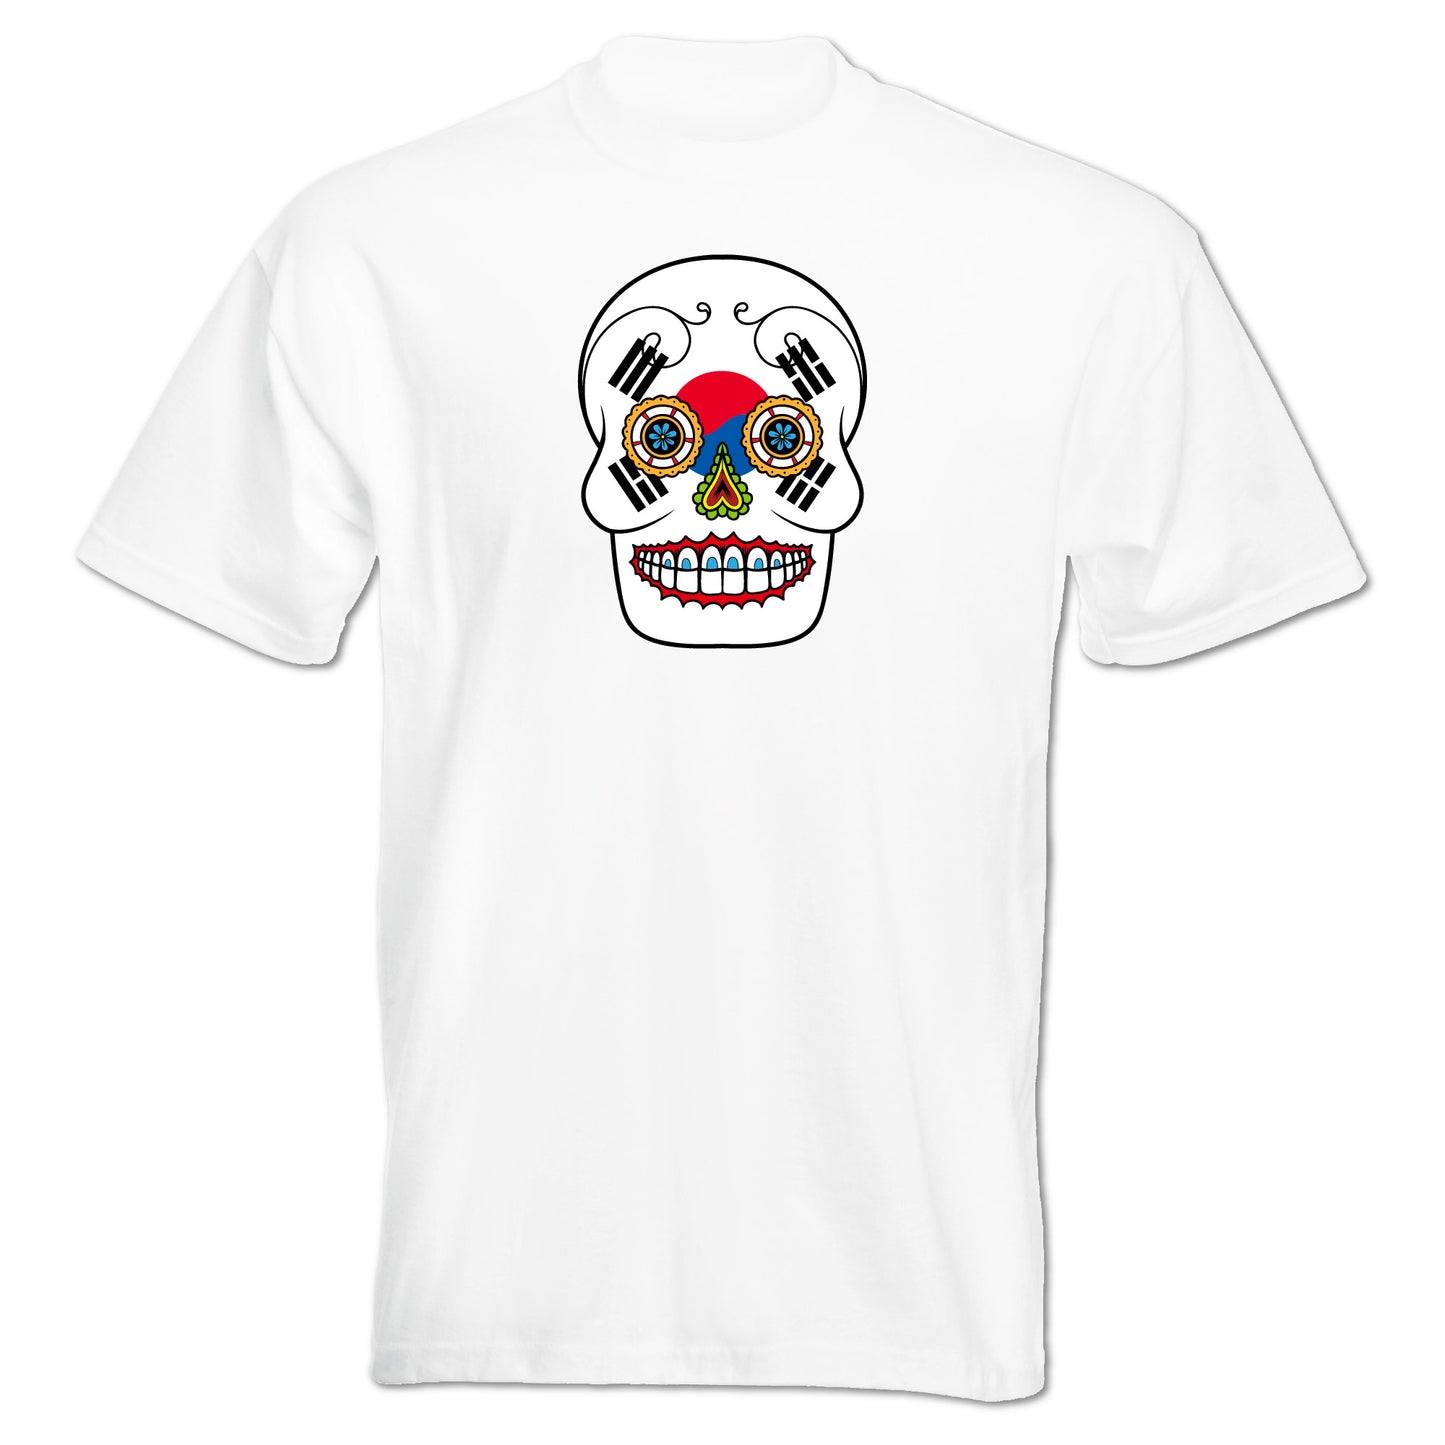 INDIGOS UG - T-Shirt Herren - Südkorea - Skull - Fussball